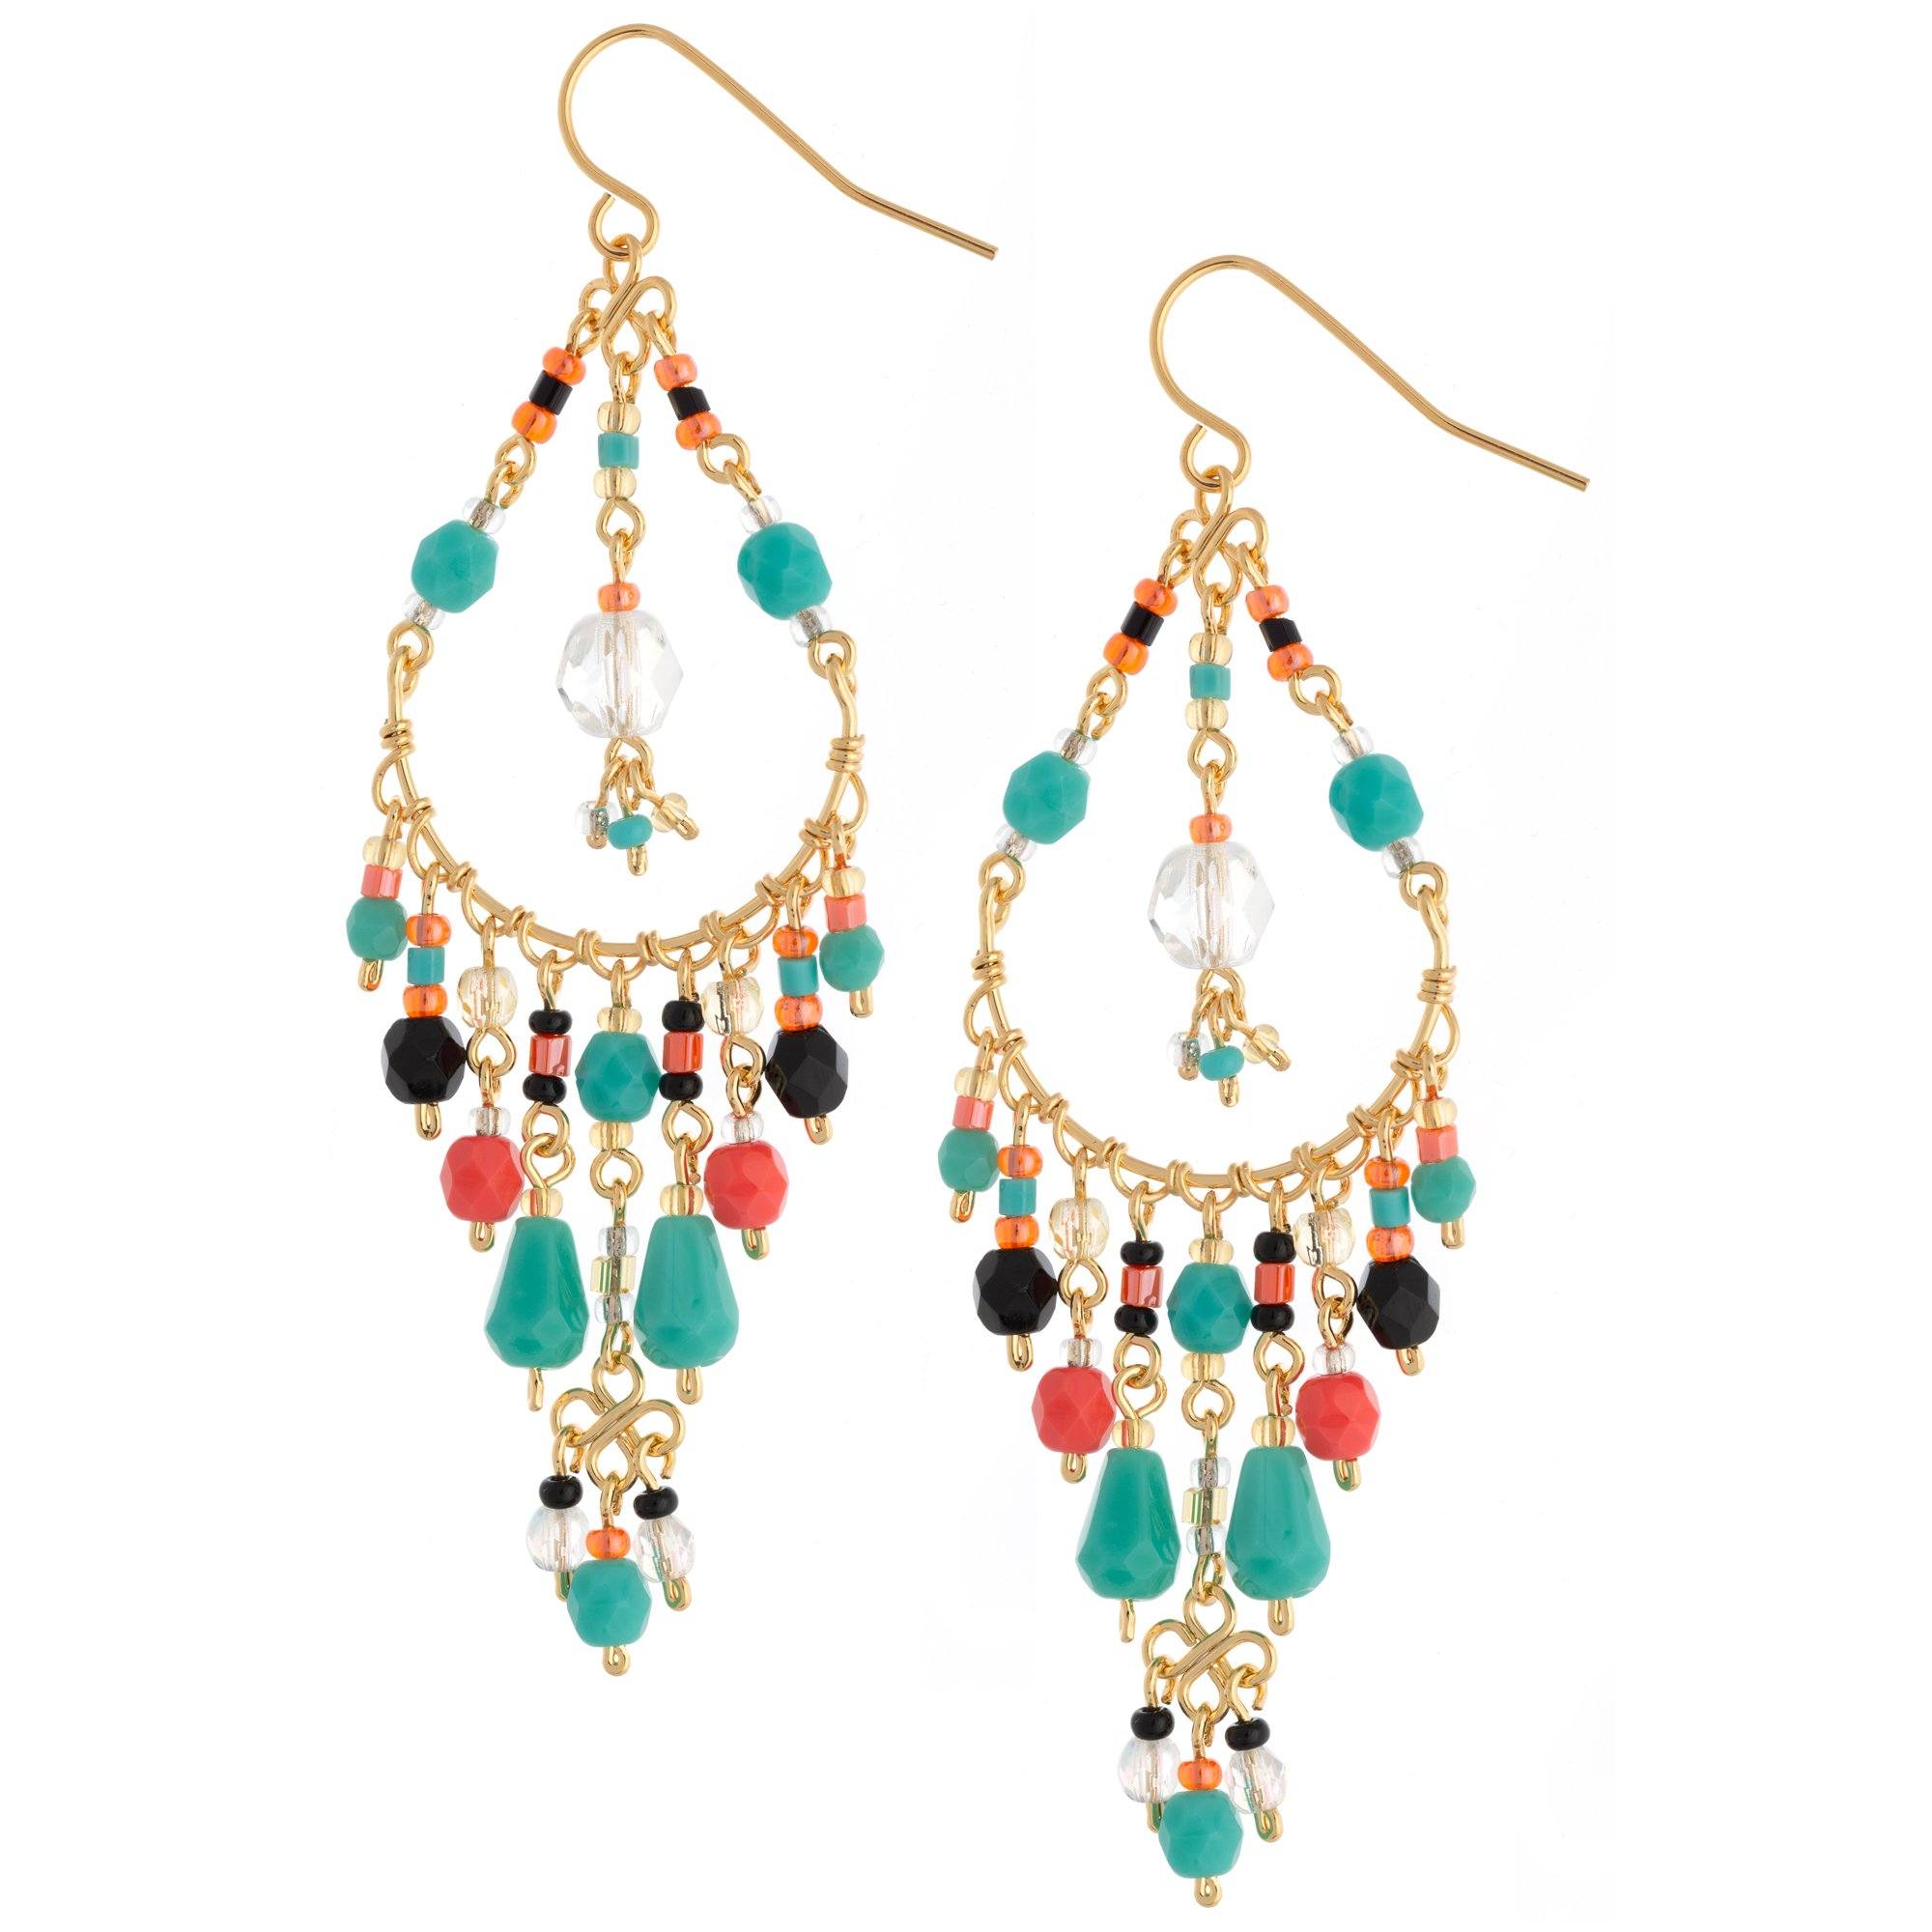 Dazzling Beaded Chandelier Earrings - Turquoise